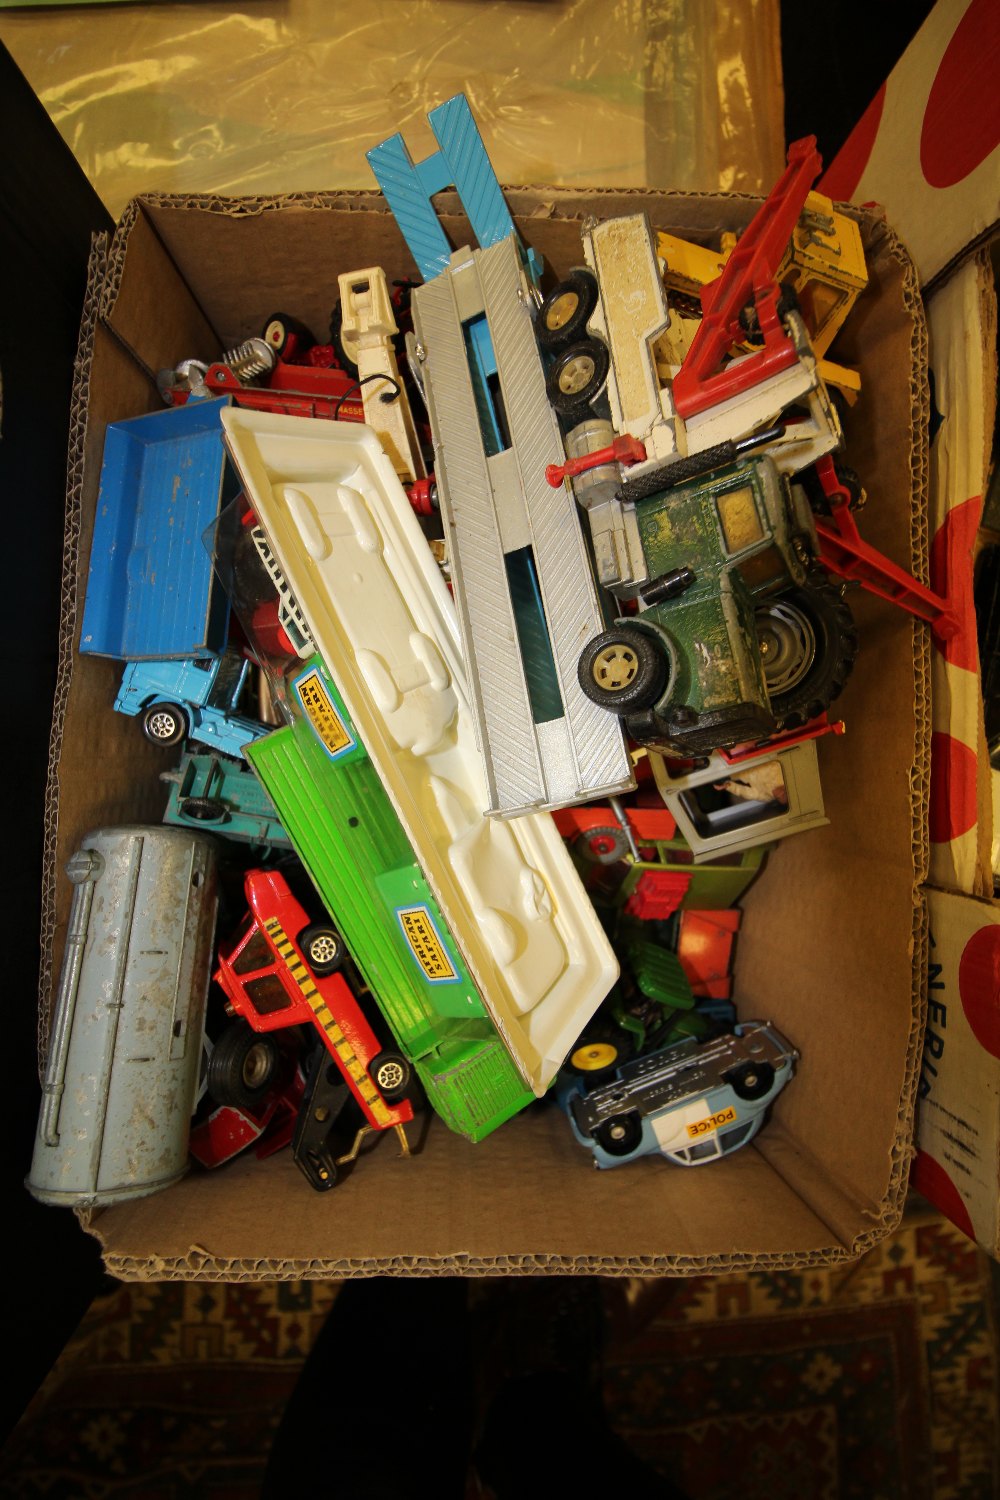 Box of toy cars - Matchbox, Corgi etc